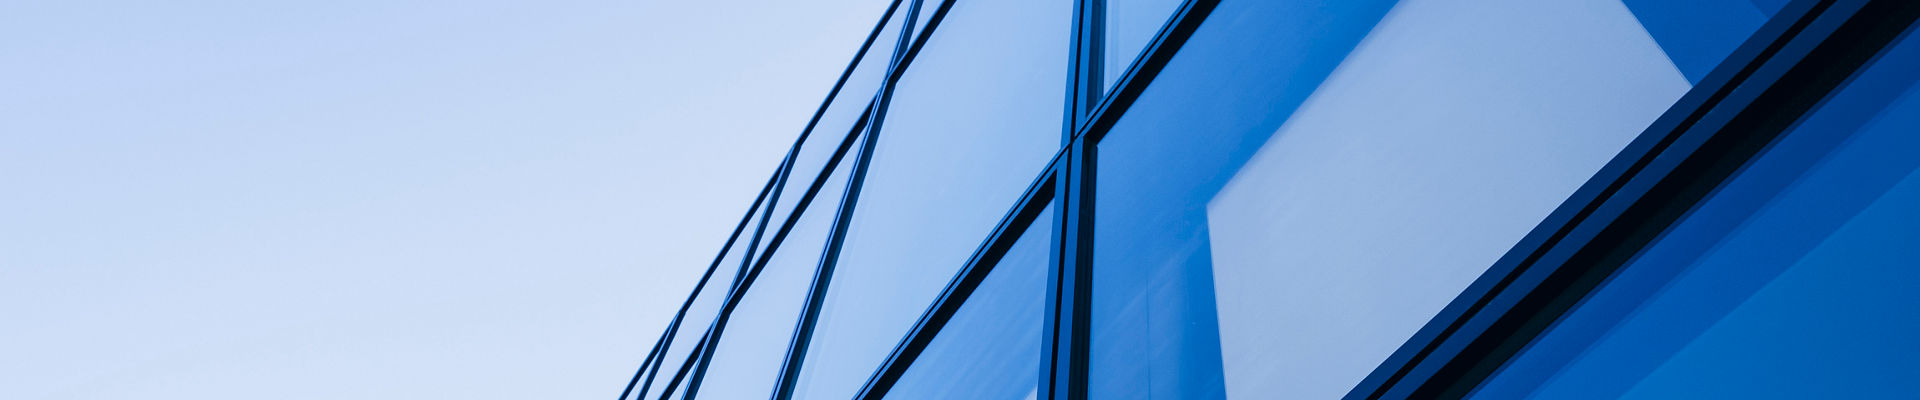 Detalle arquitectónico de la fachada de vidrio moderno en tono azul 